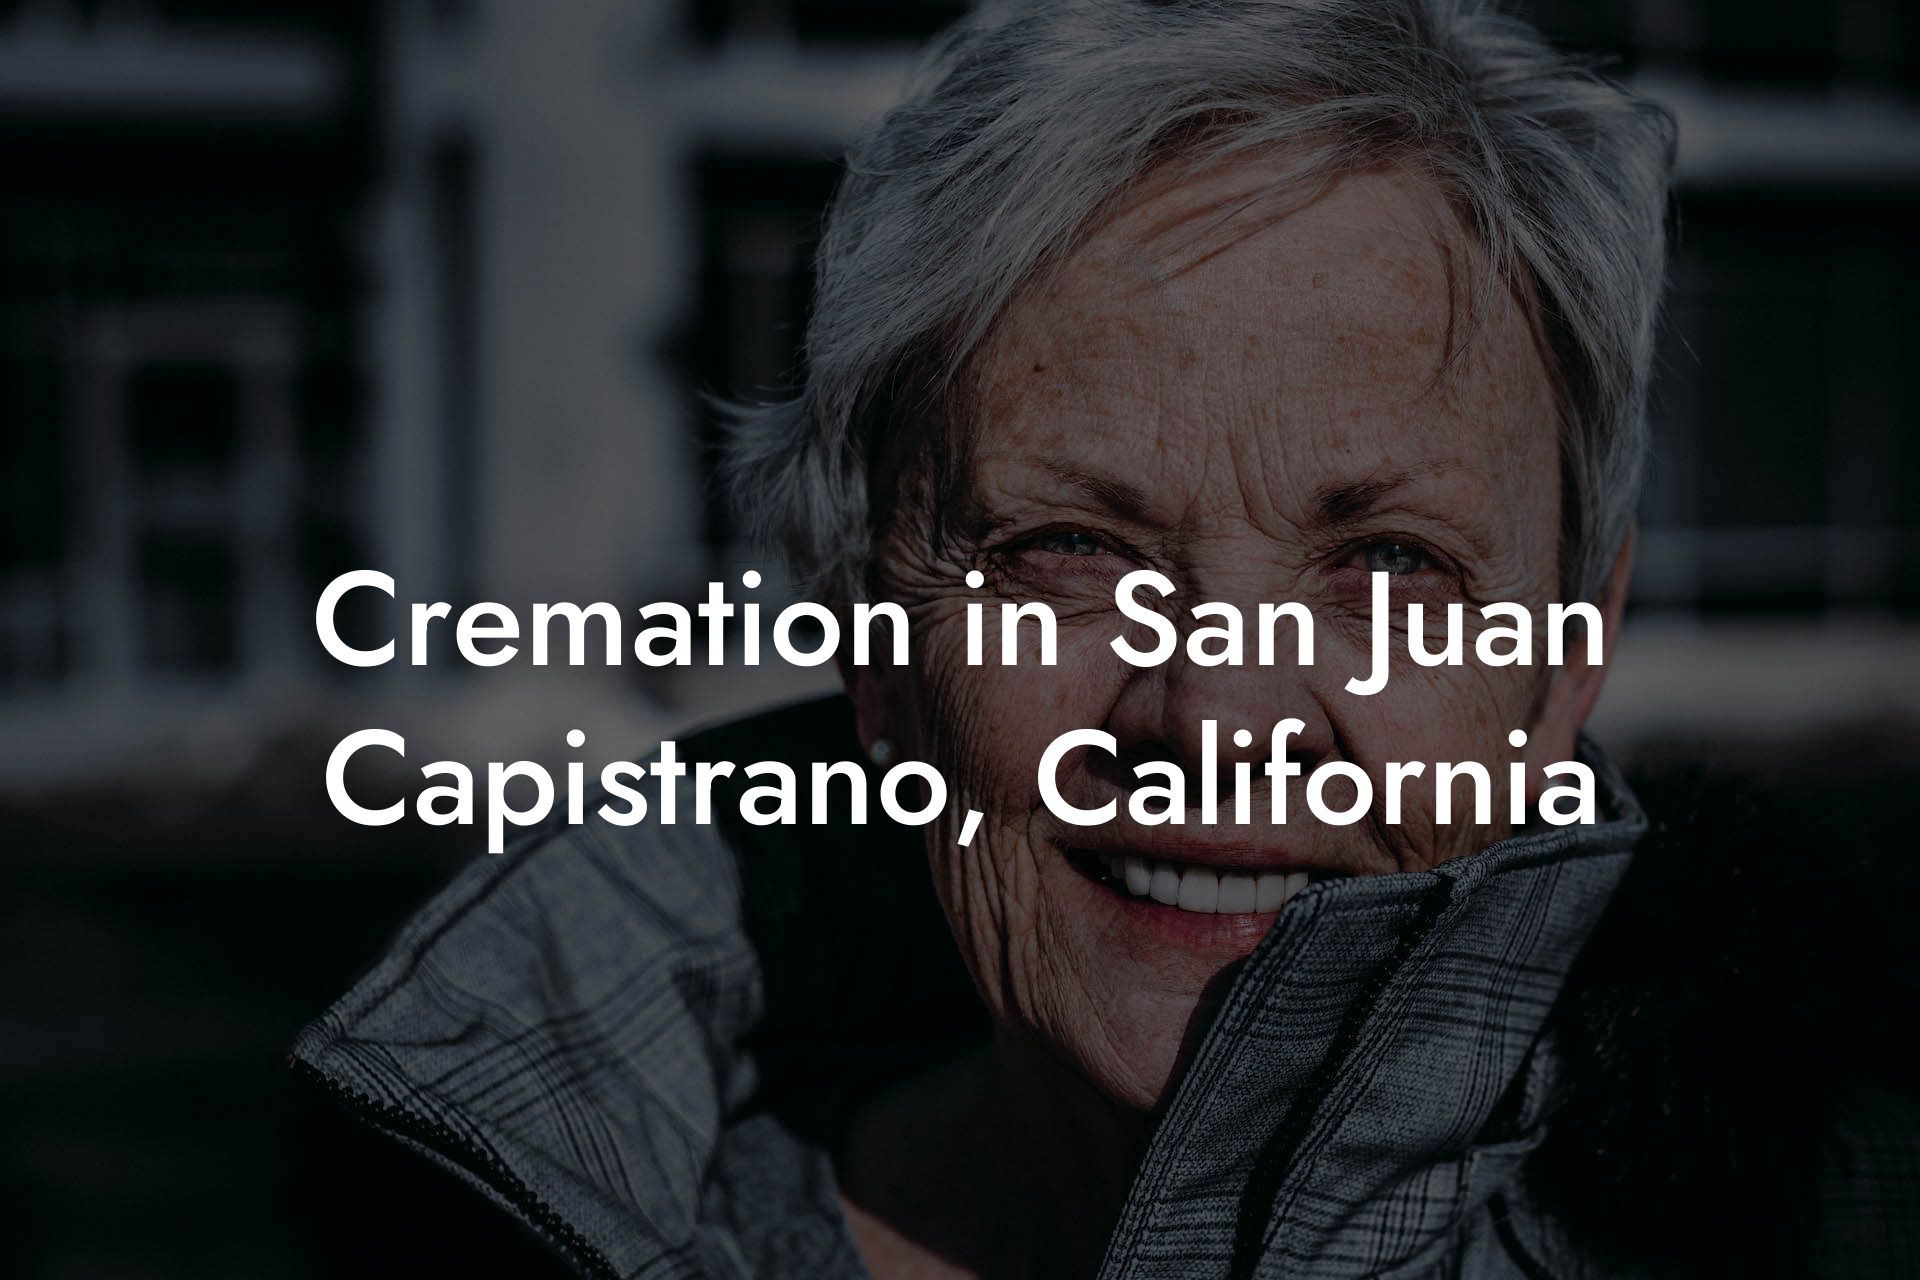 Cremation in San Juan Capistrano, California